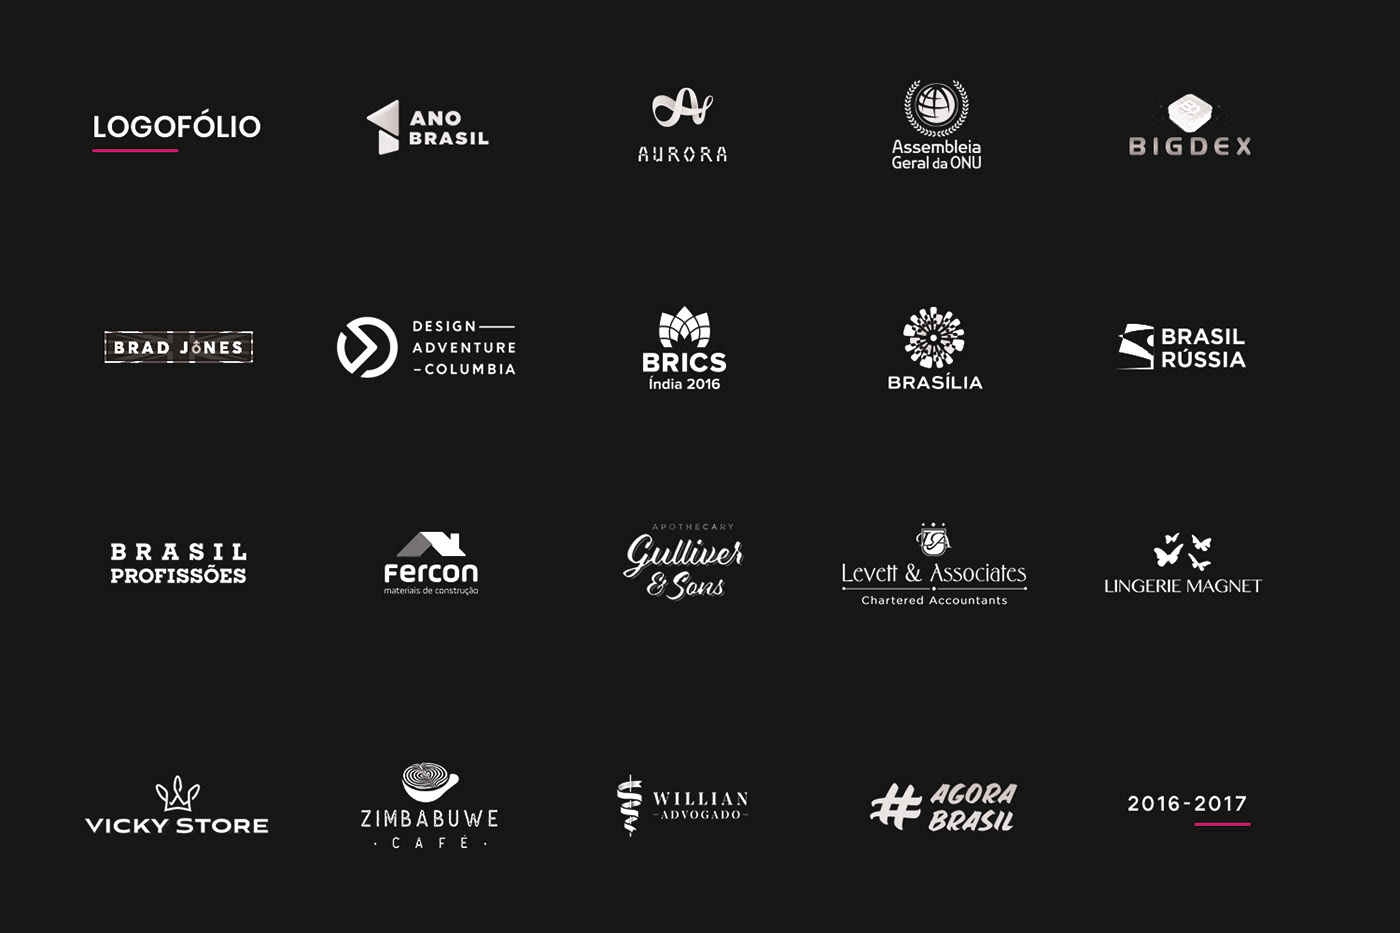 brands logos 2014 - 2015 henrique brands